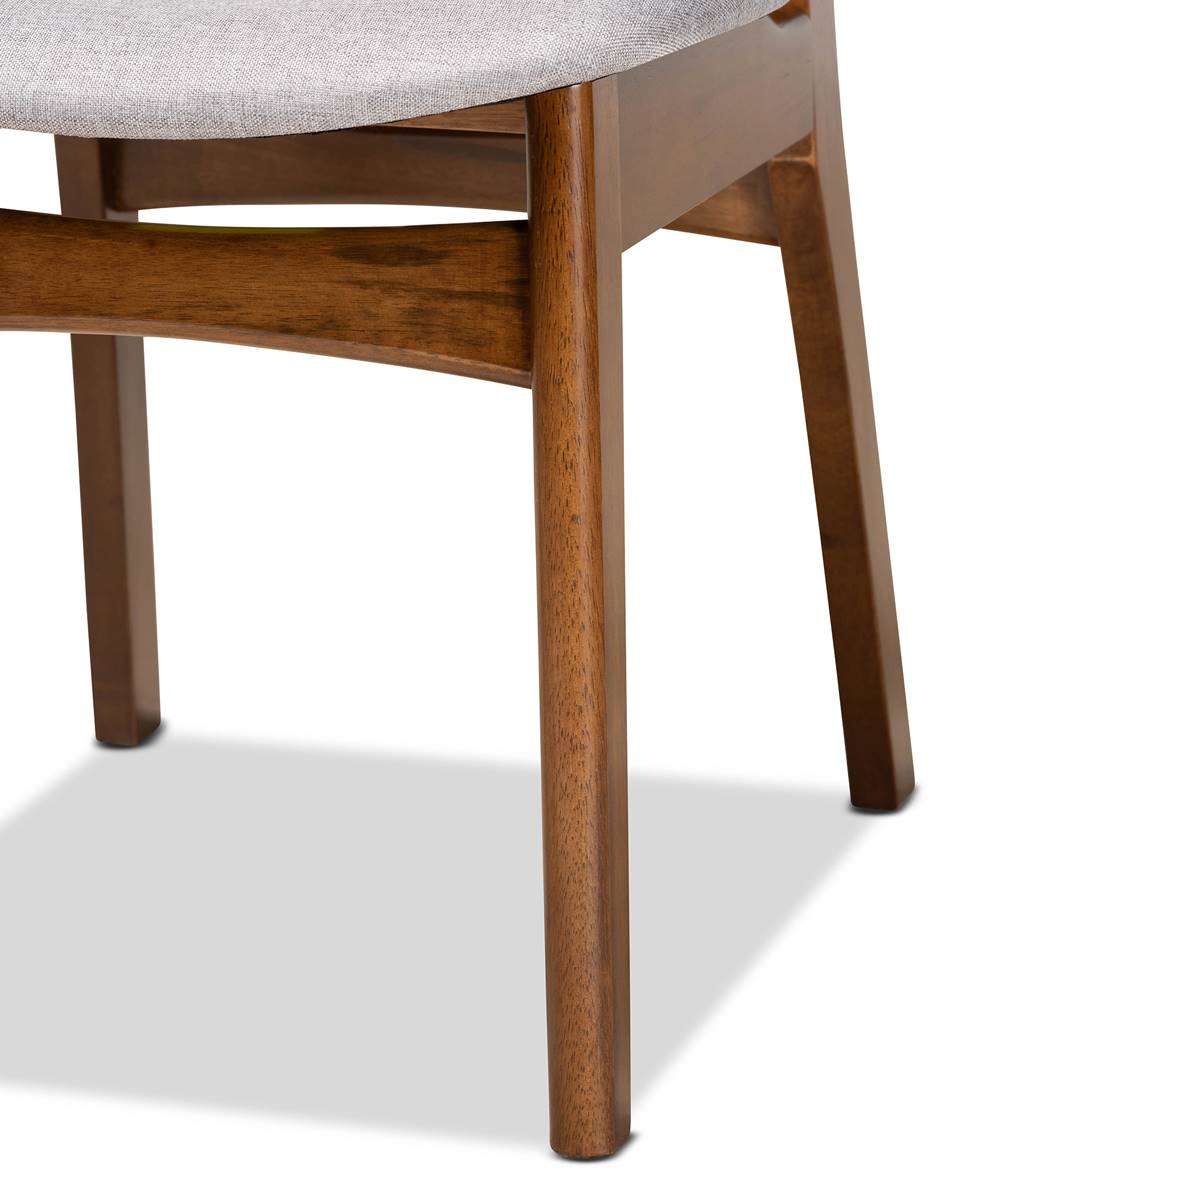 Baxton Studio Katya Modern Walnut Brown Wood 2pc Dining Chair Set